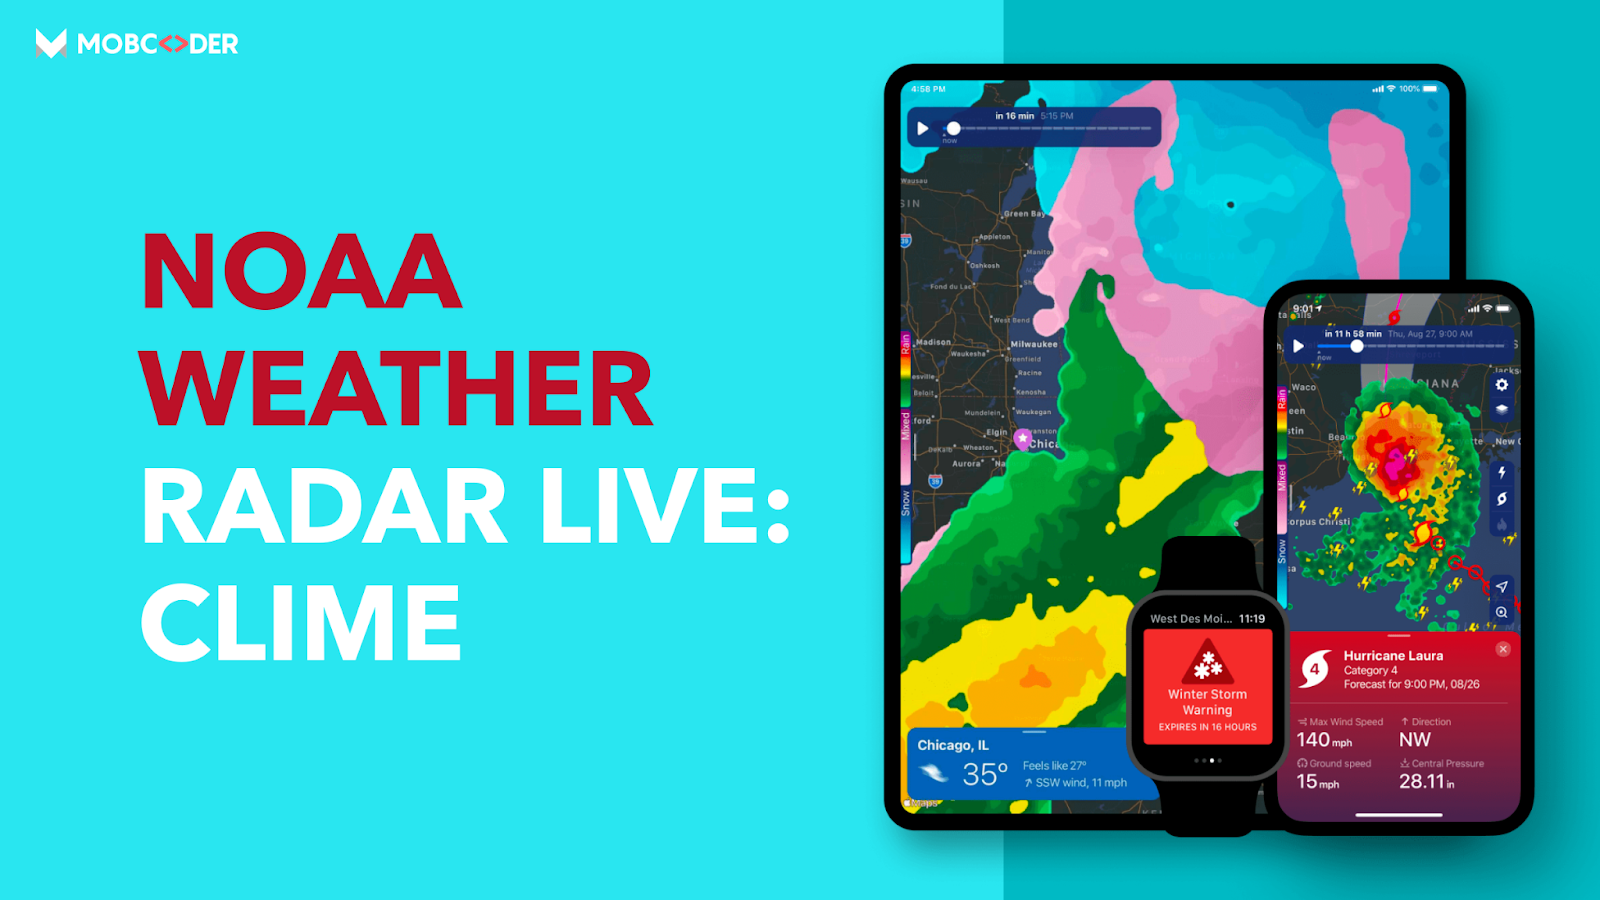 NOAA Weather Radar Live: Clime